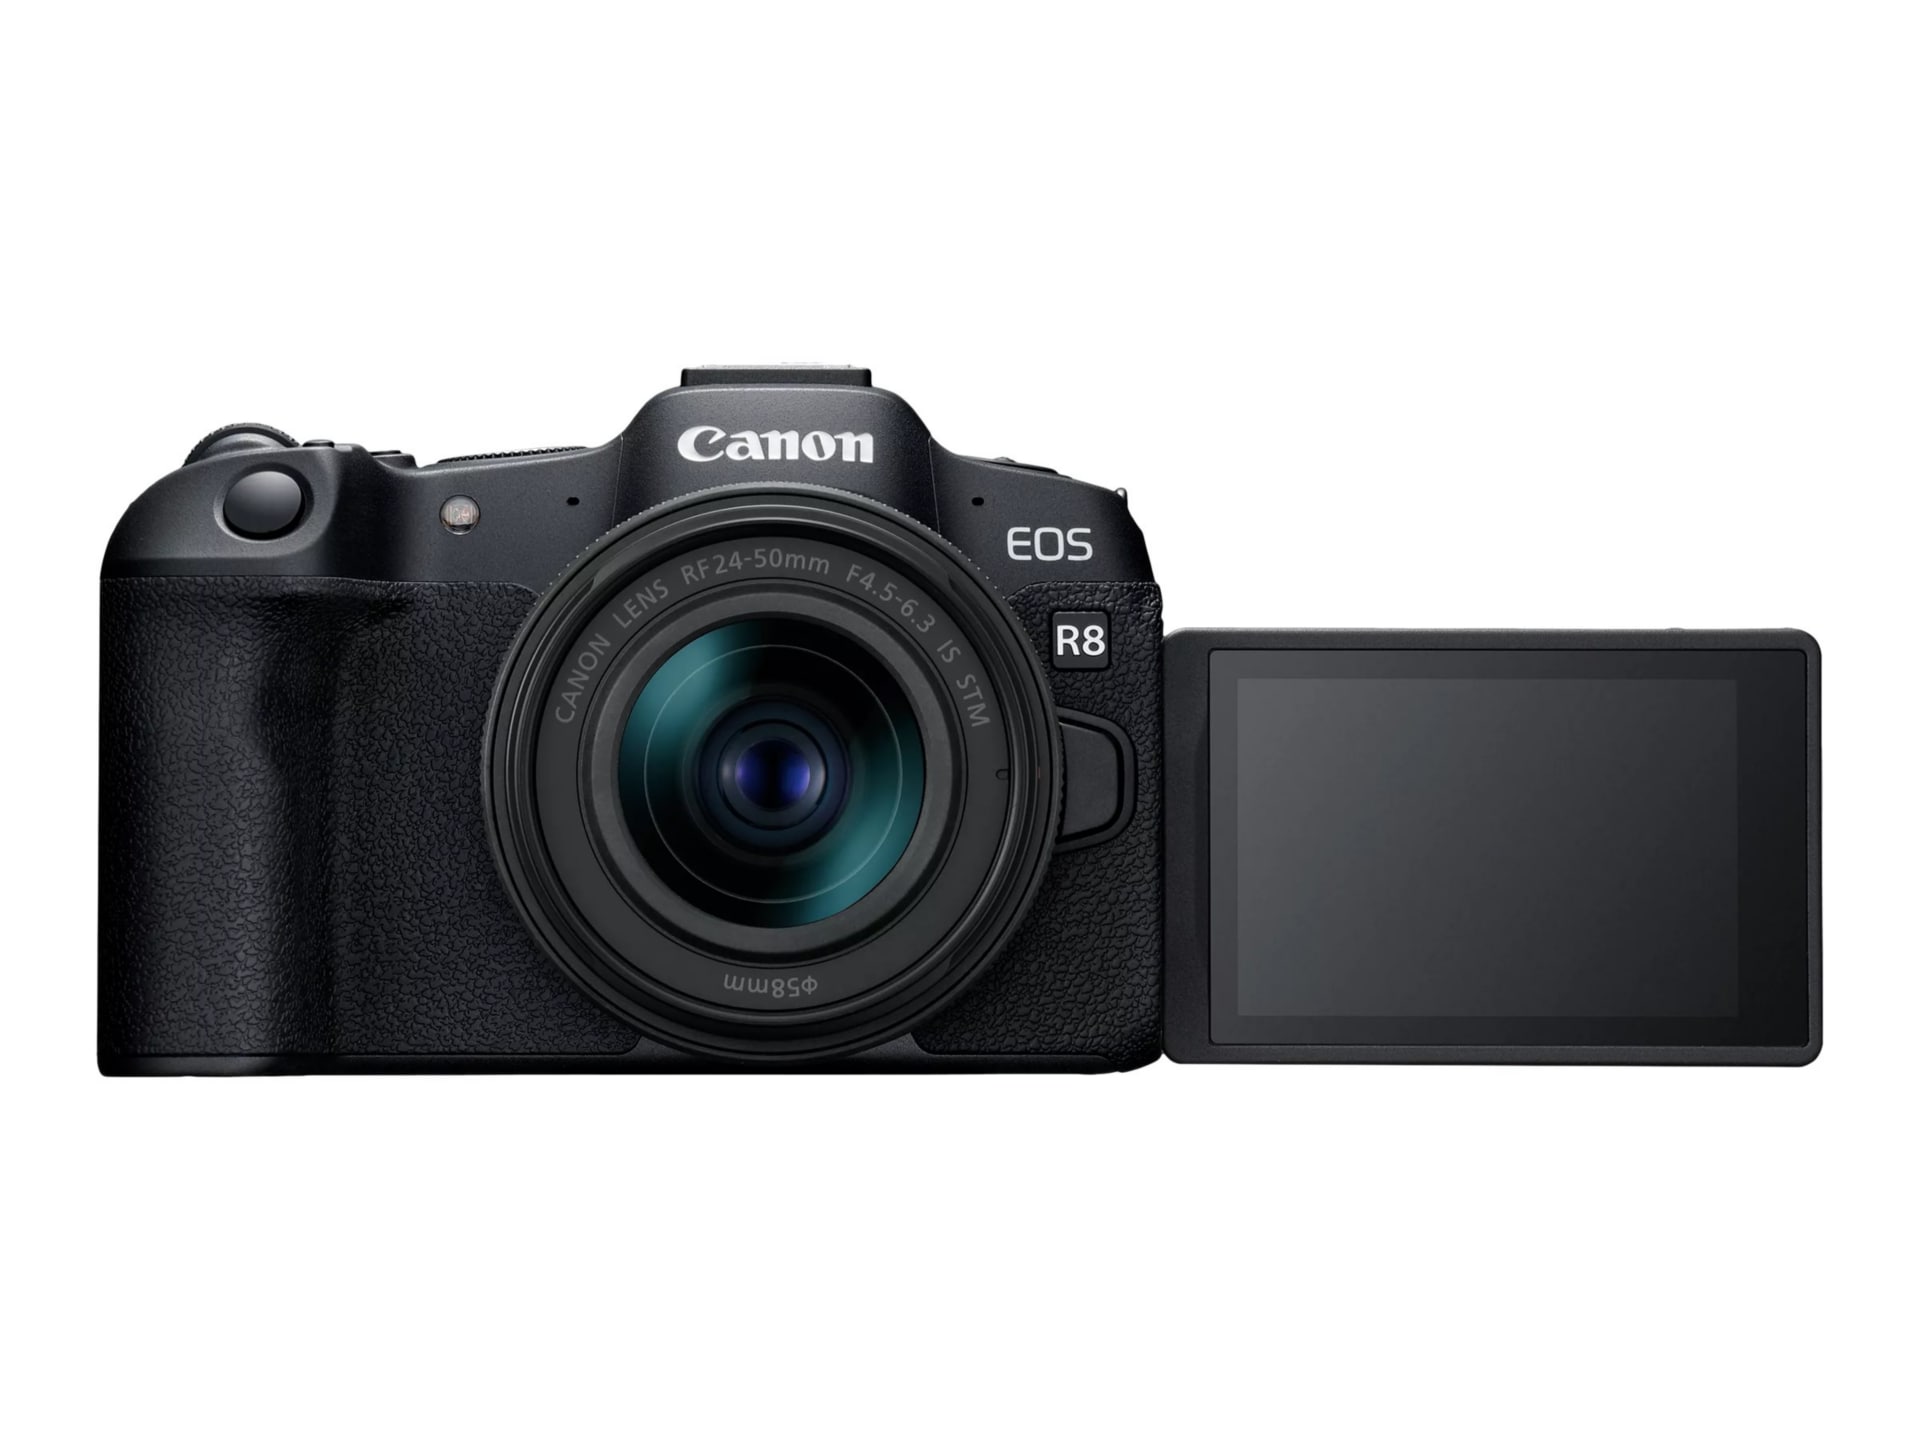 Canon EOS R8 - digital camera RF 24-50mm F4.5-6.3 IS STM lens